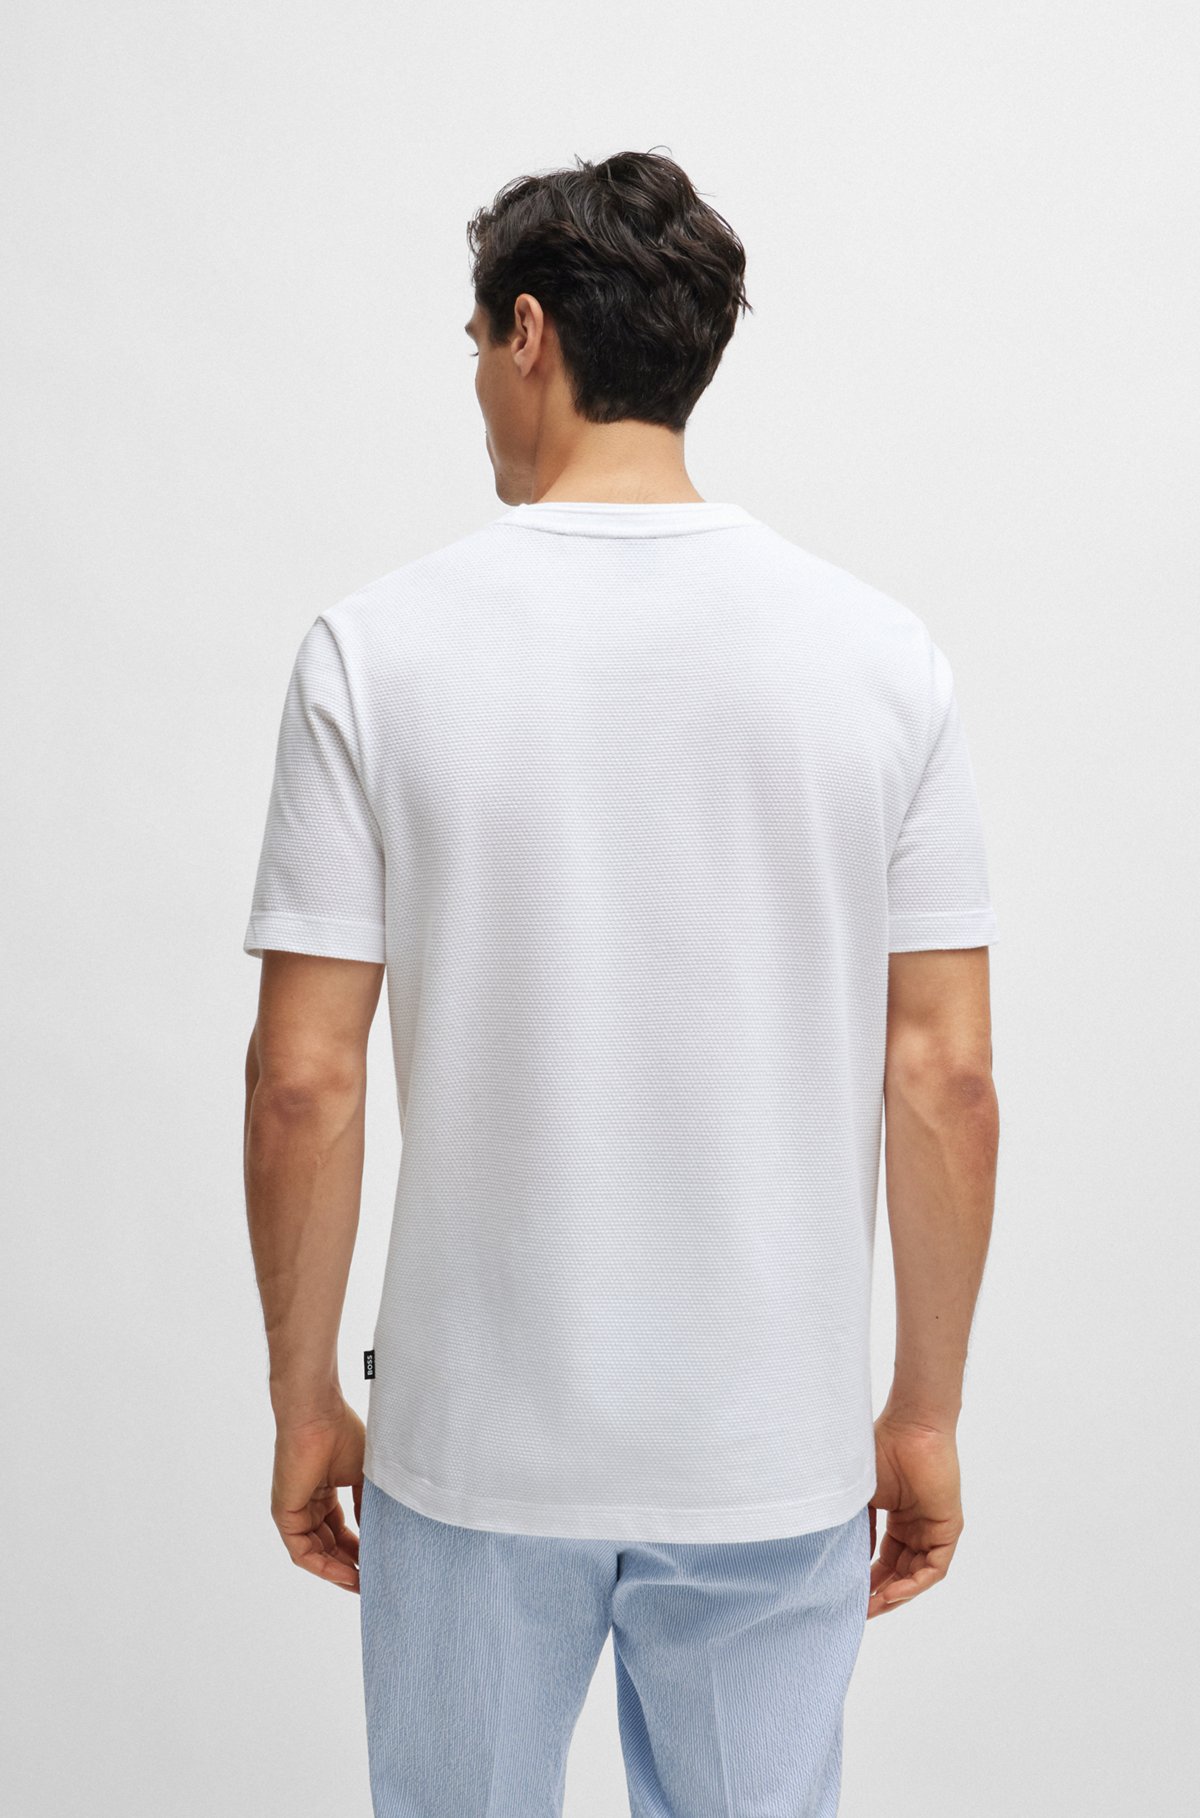 T-Shirt aus Baumwoll-Mix mit kreisförmiger Jacquard-Struktur, Weiß